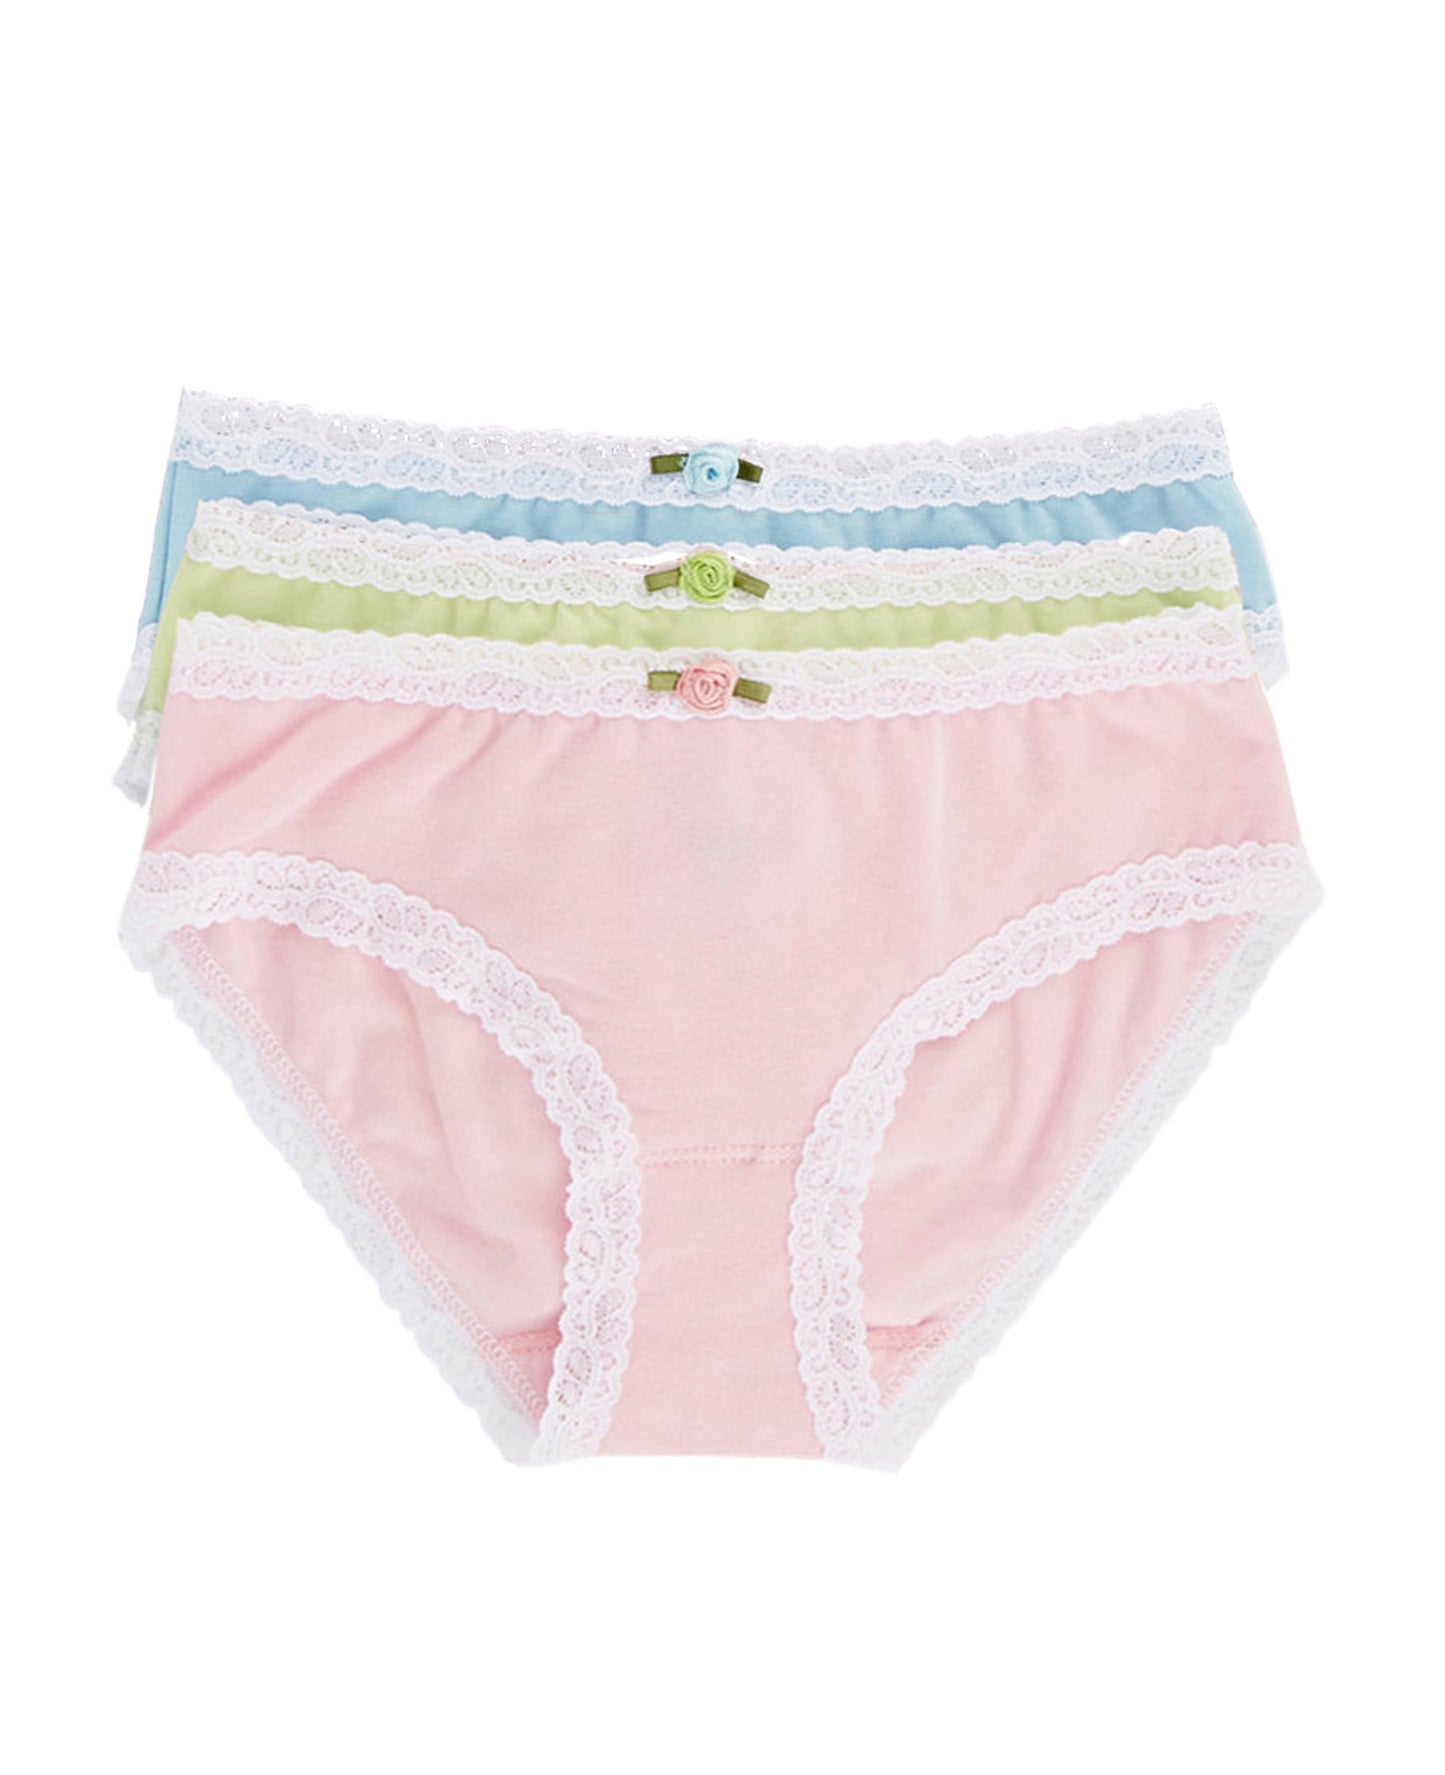 U20 Esme Girl's 3-Pack Panty in Solid Color